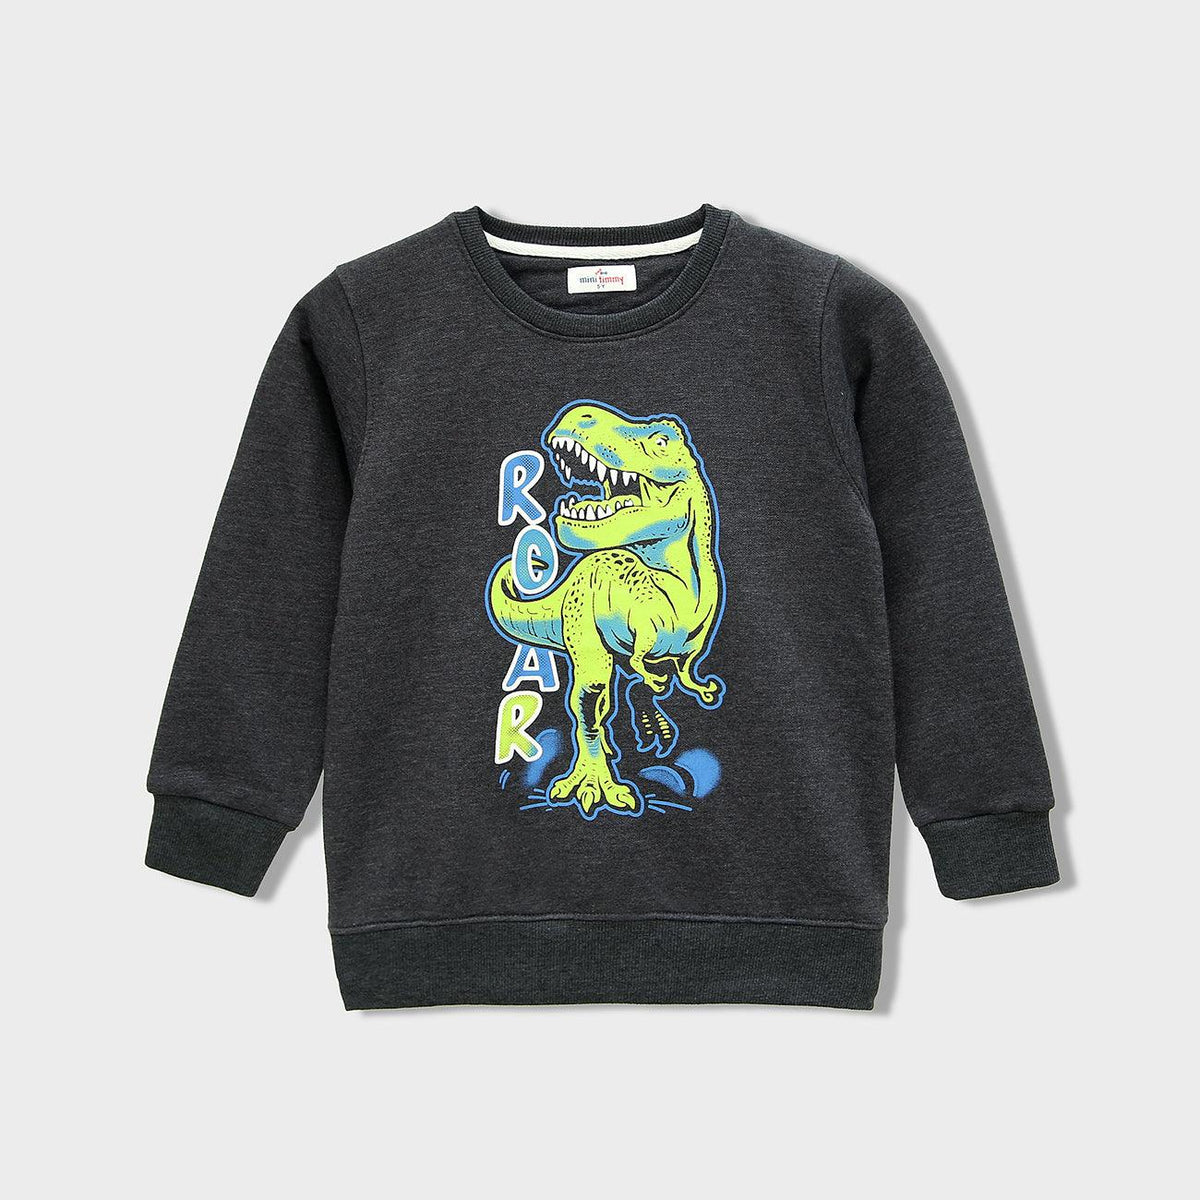 Premium Quality Graphic Printed Fleece Sweatshirt For Kids (MI-120089) - Brands River